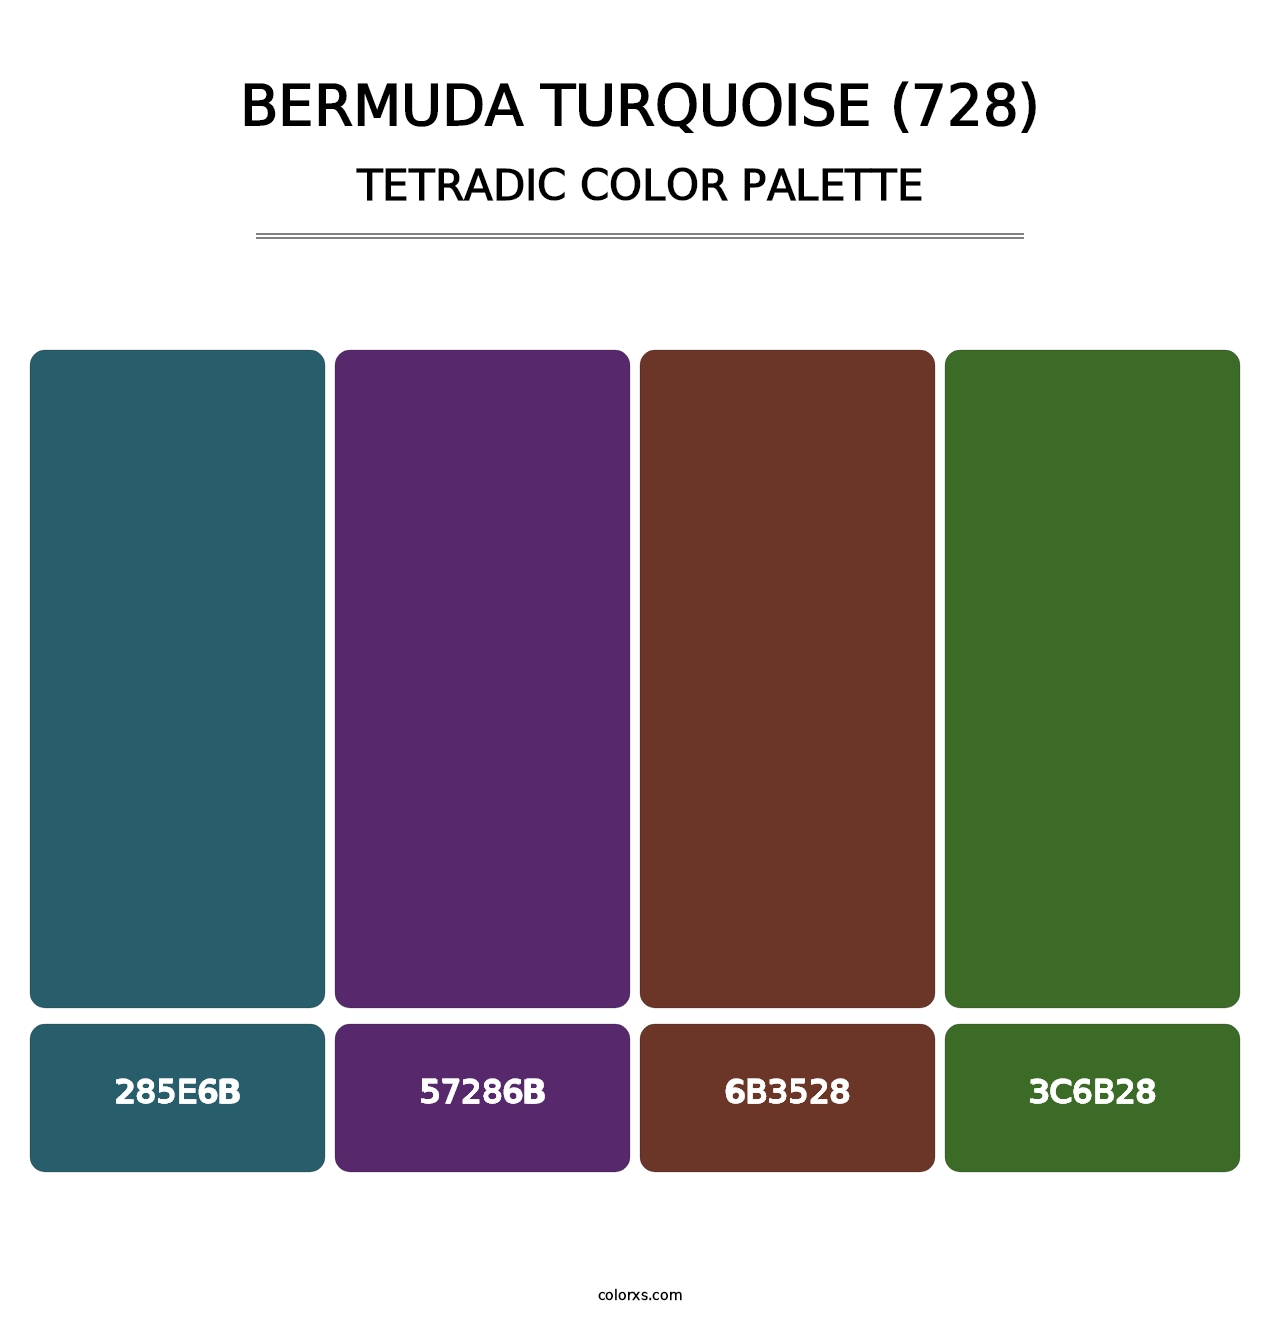 Bermuda Turquoise (728) - Tetradic Color Palette